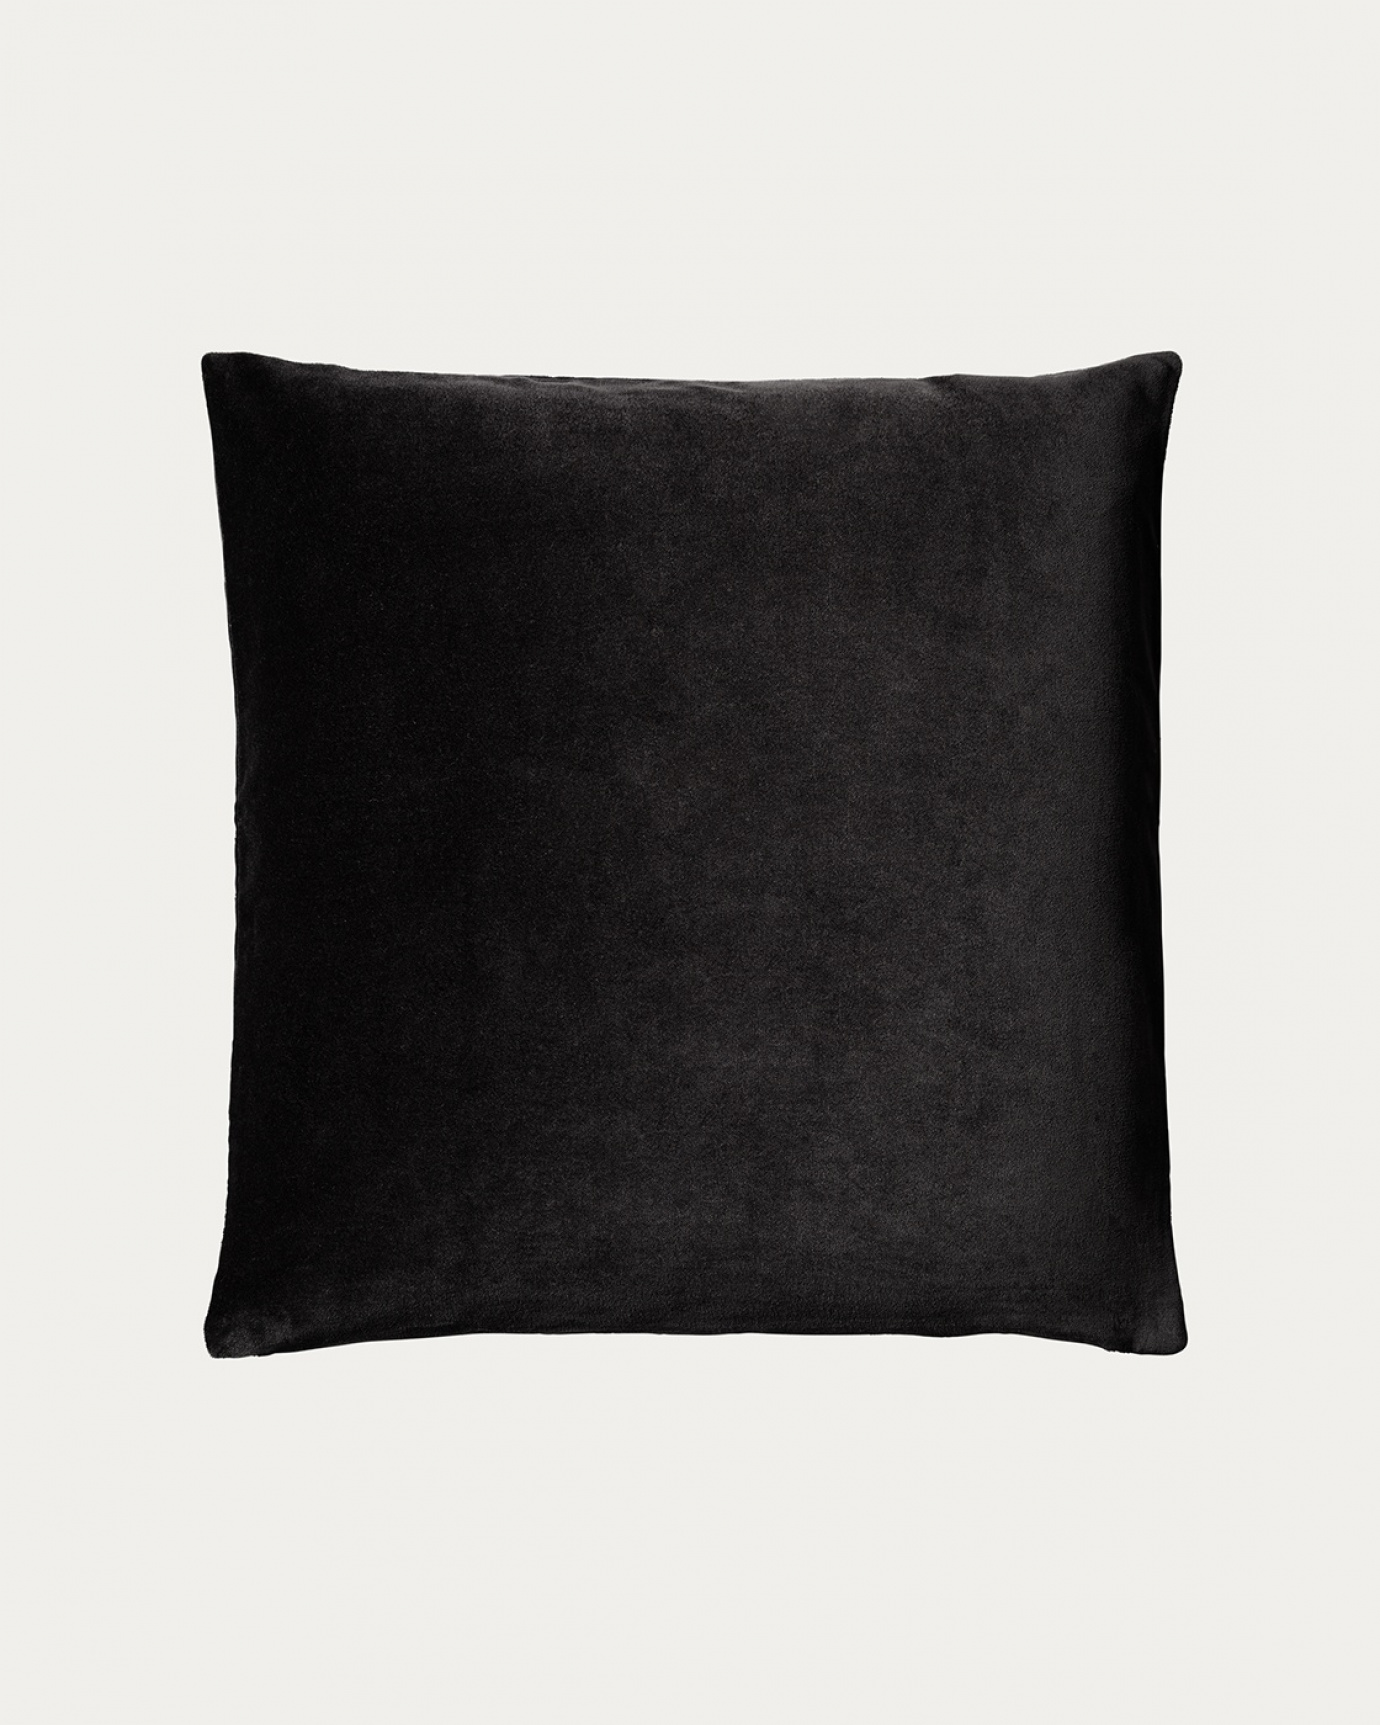 Produktbild svart PAOLO kuddfodral av mjuk ekologisk bomullssammet från LINUM DESIGN. Storlek 50x50 cm.